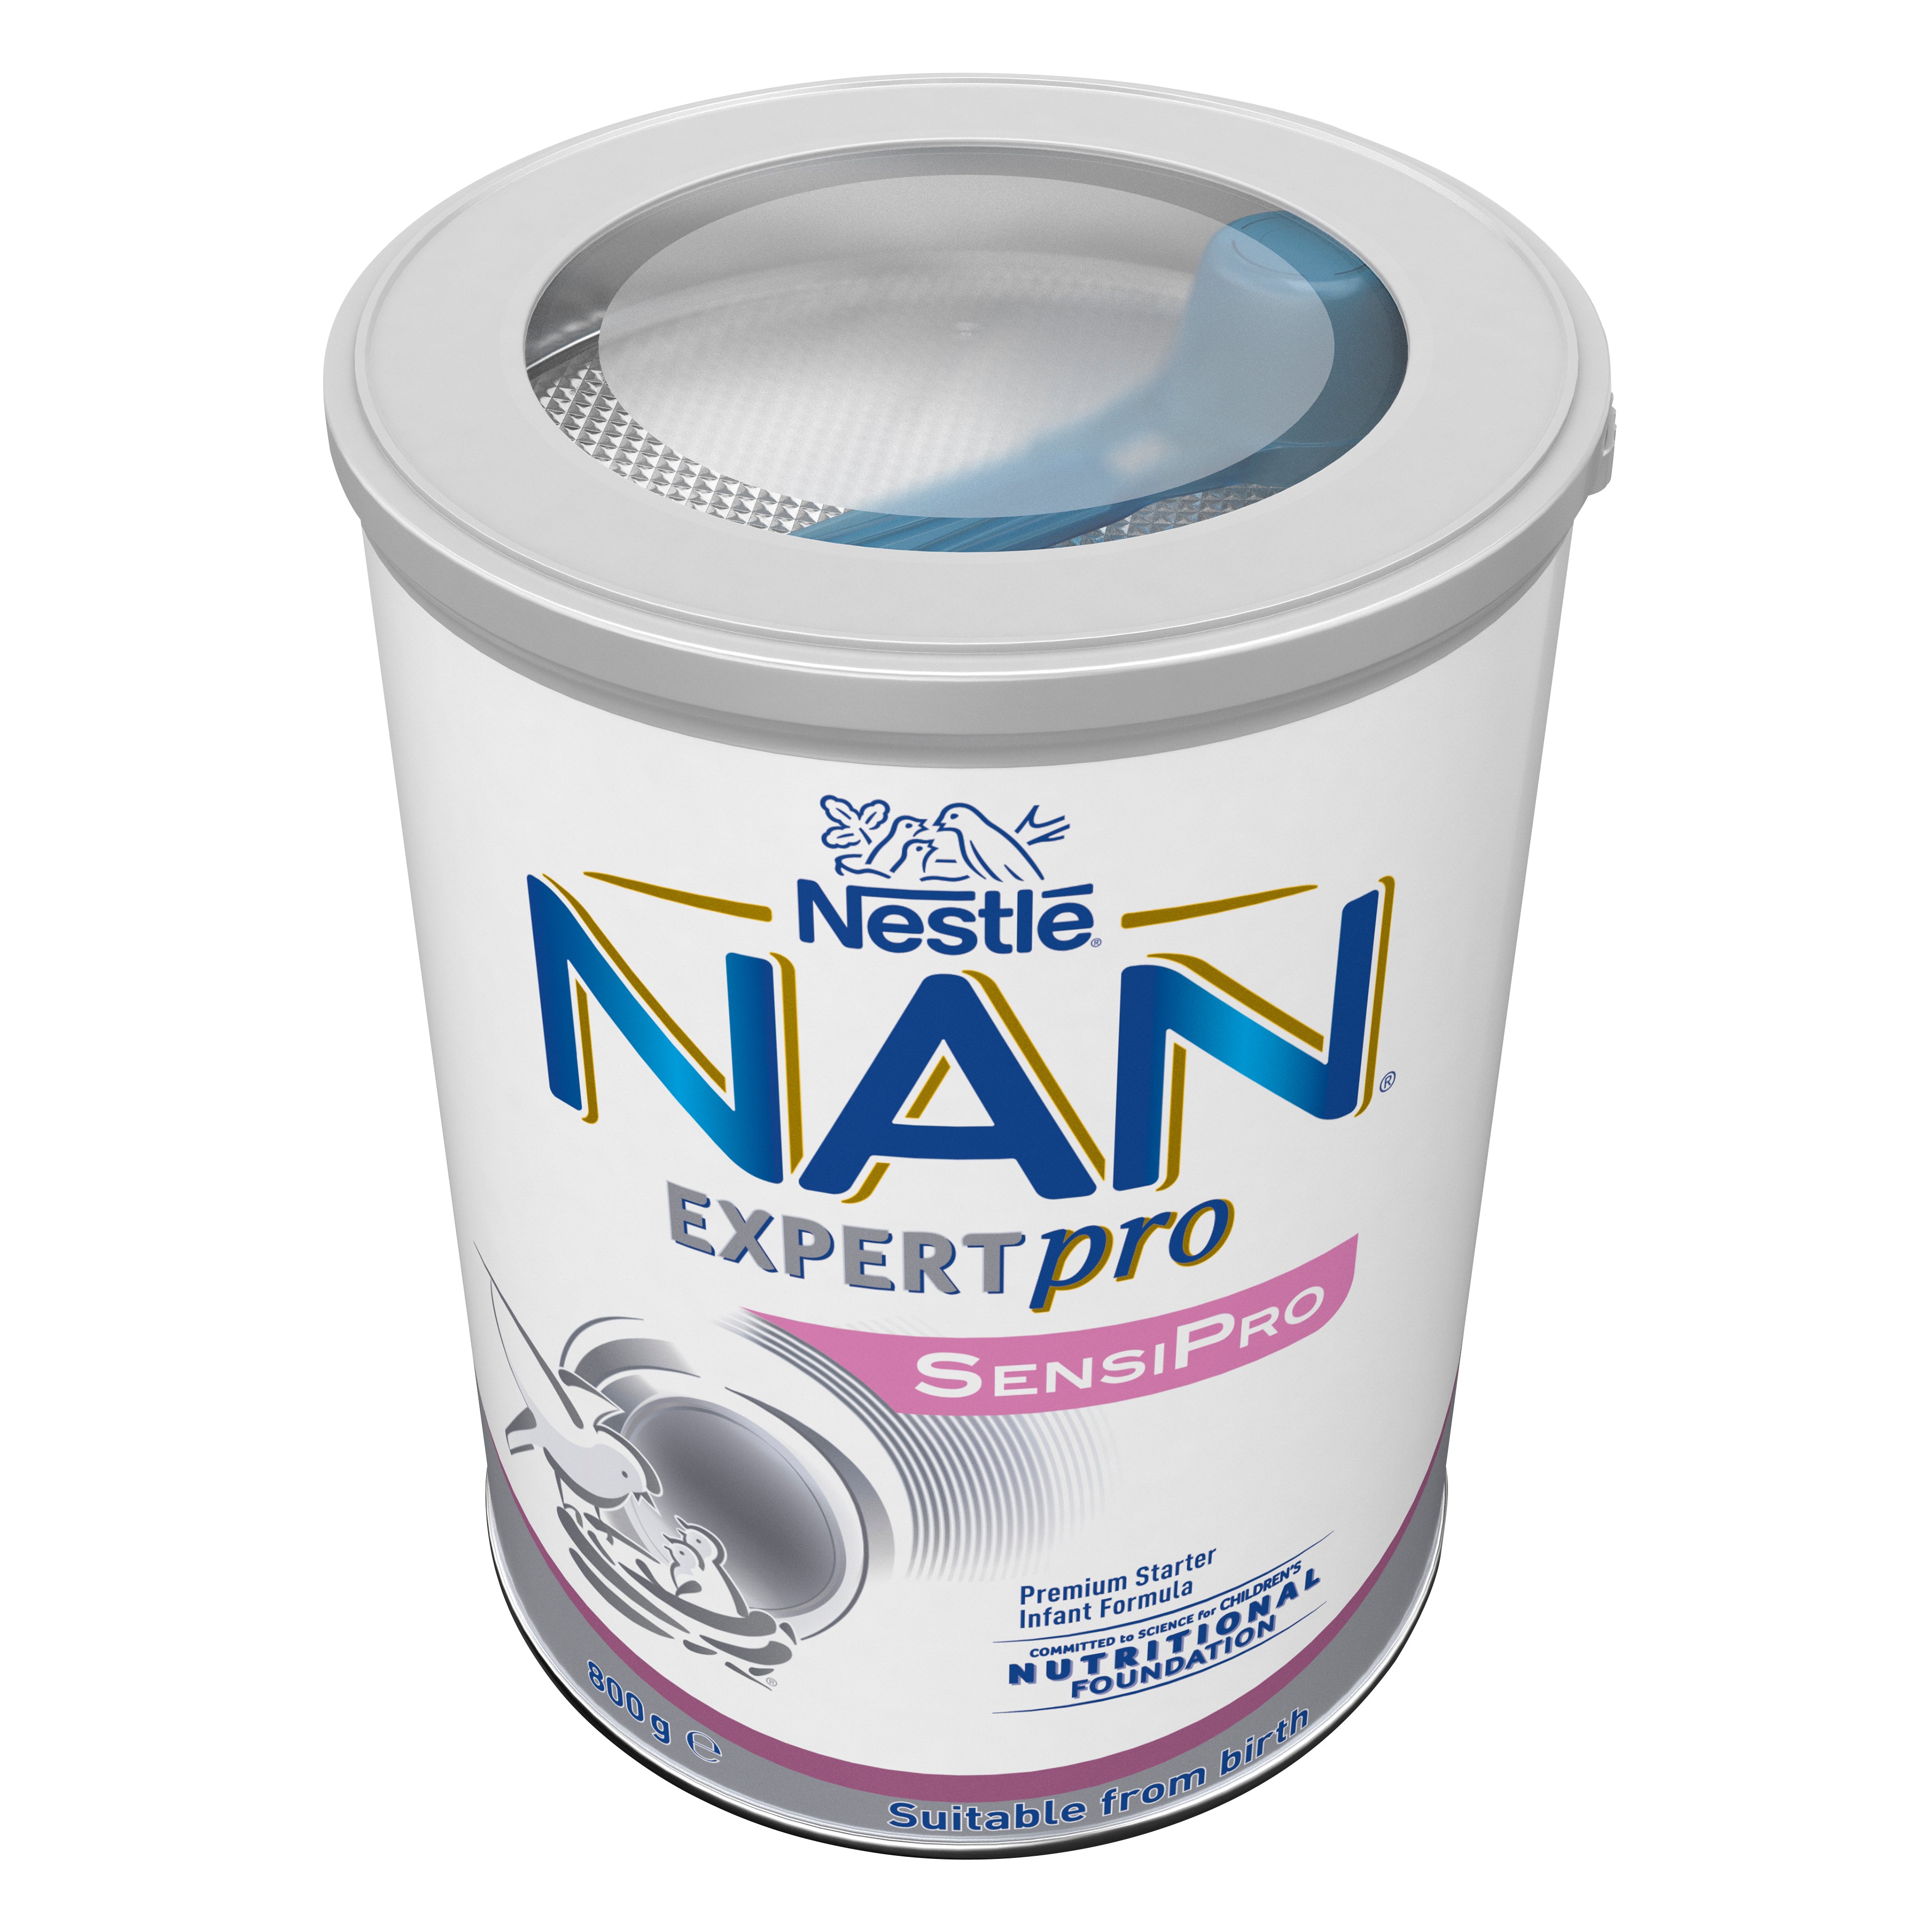 Nestlé Nan Expert Pro Total 1 Infate Milk 800g – ASFO Store